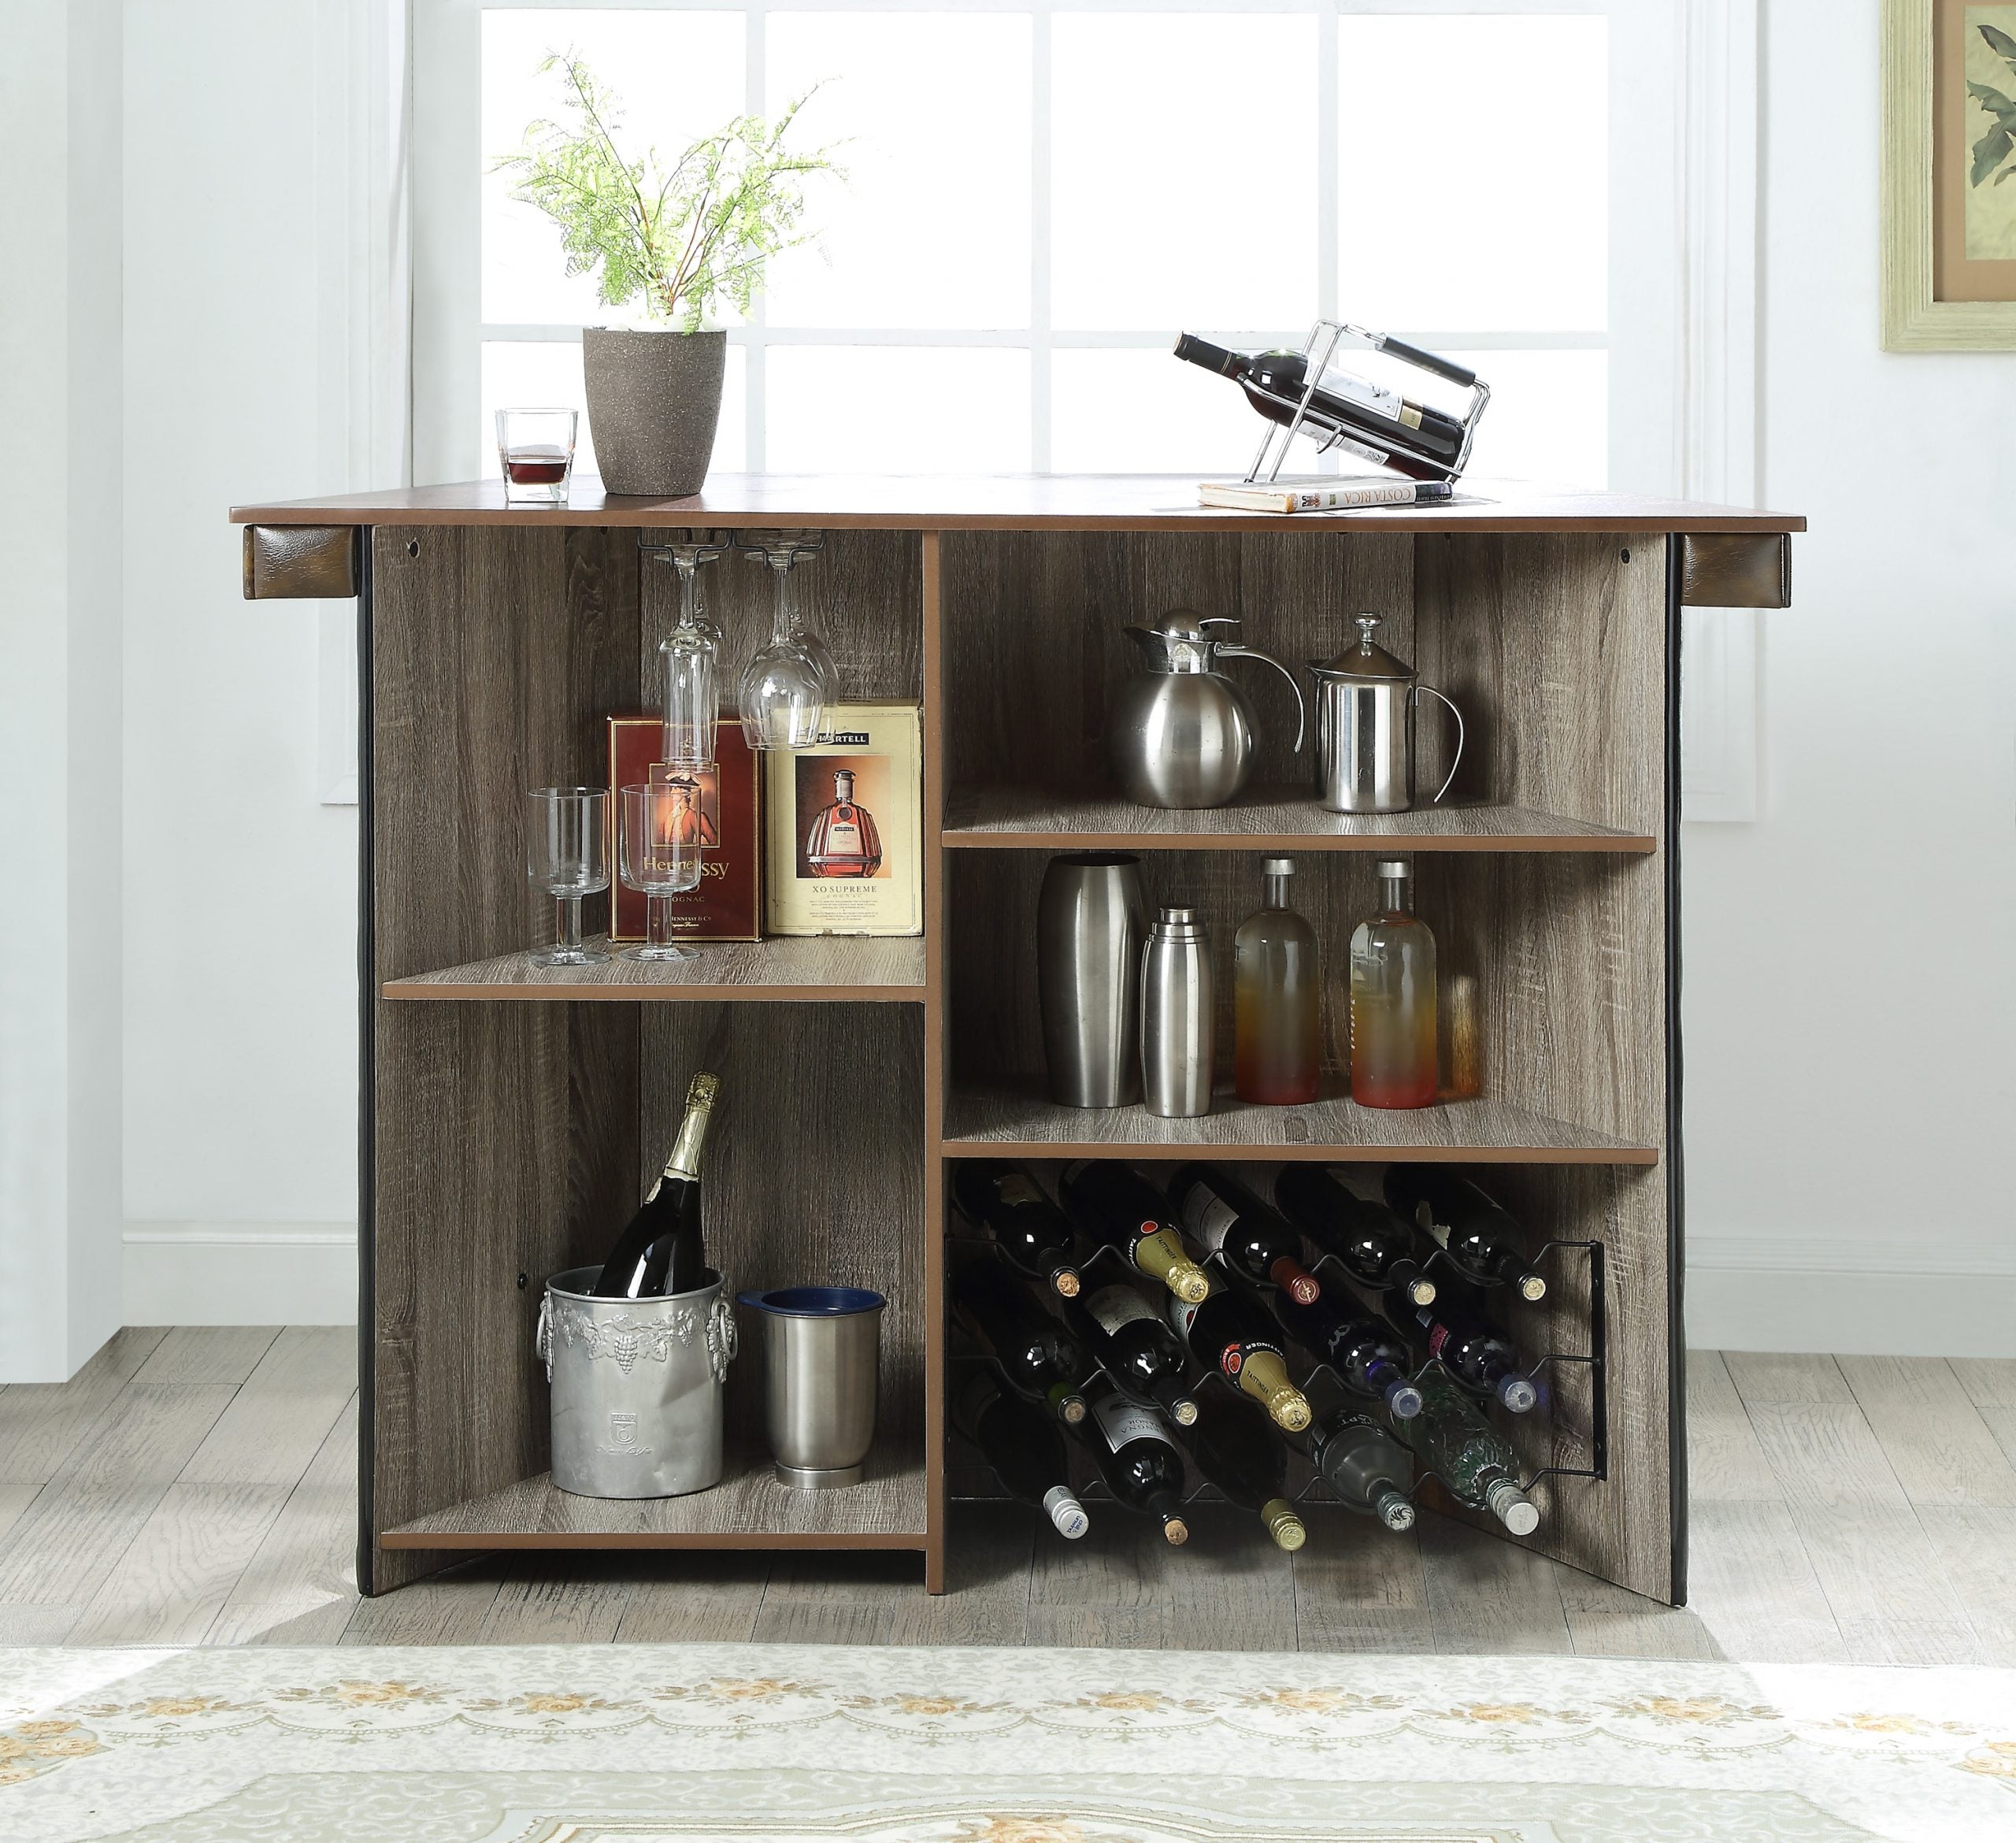 Large bar counter for wine glasses, wine bottles and beverages